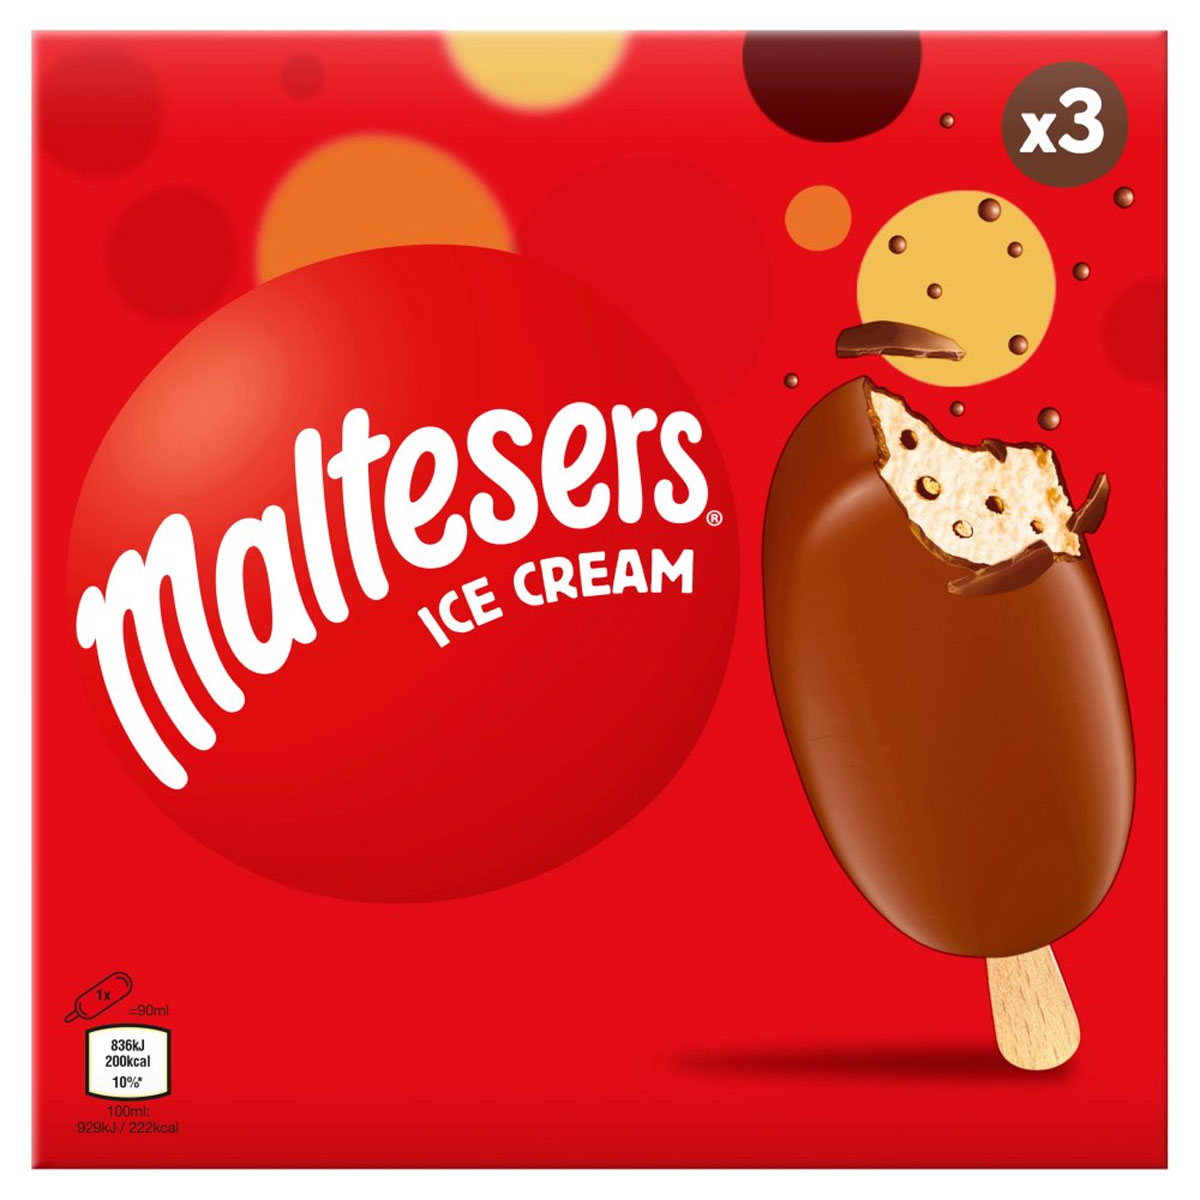 Maltesers - Ice Cream - 3 x 90ml - Continental Food Store